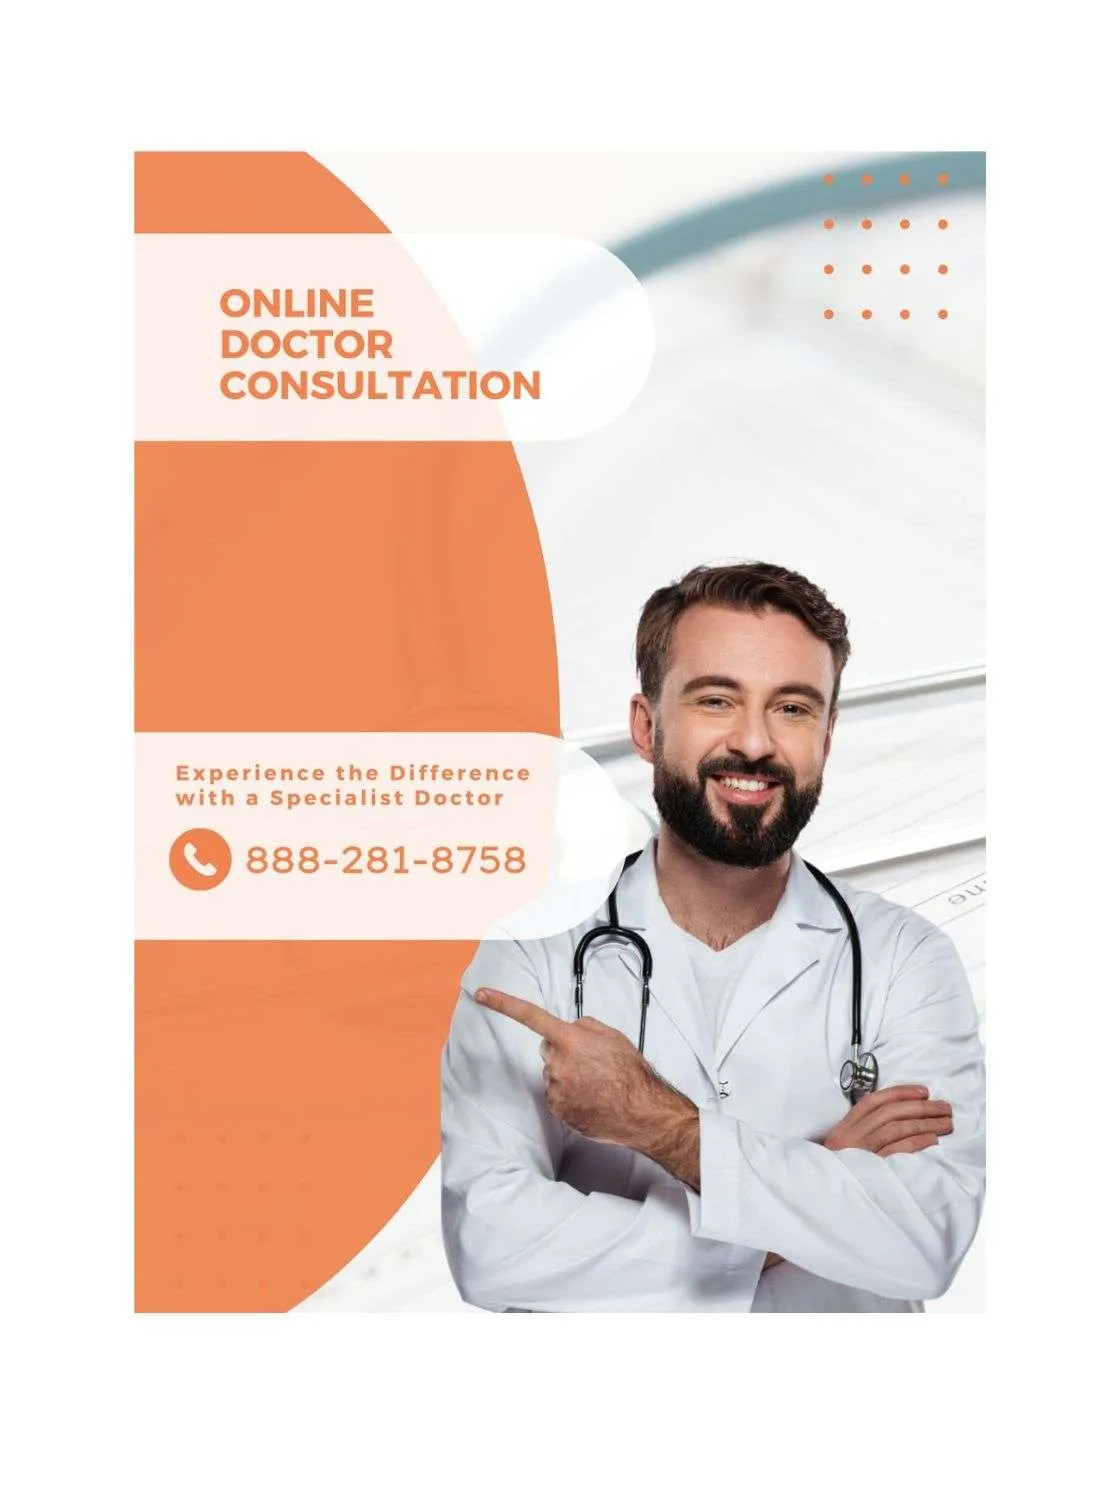 Online Doctor Consultation - MY MMJ DOCTOR